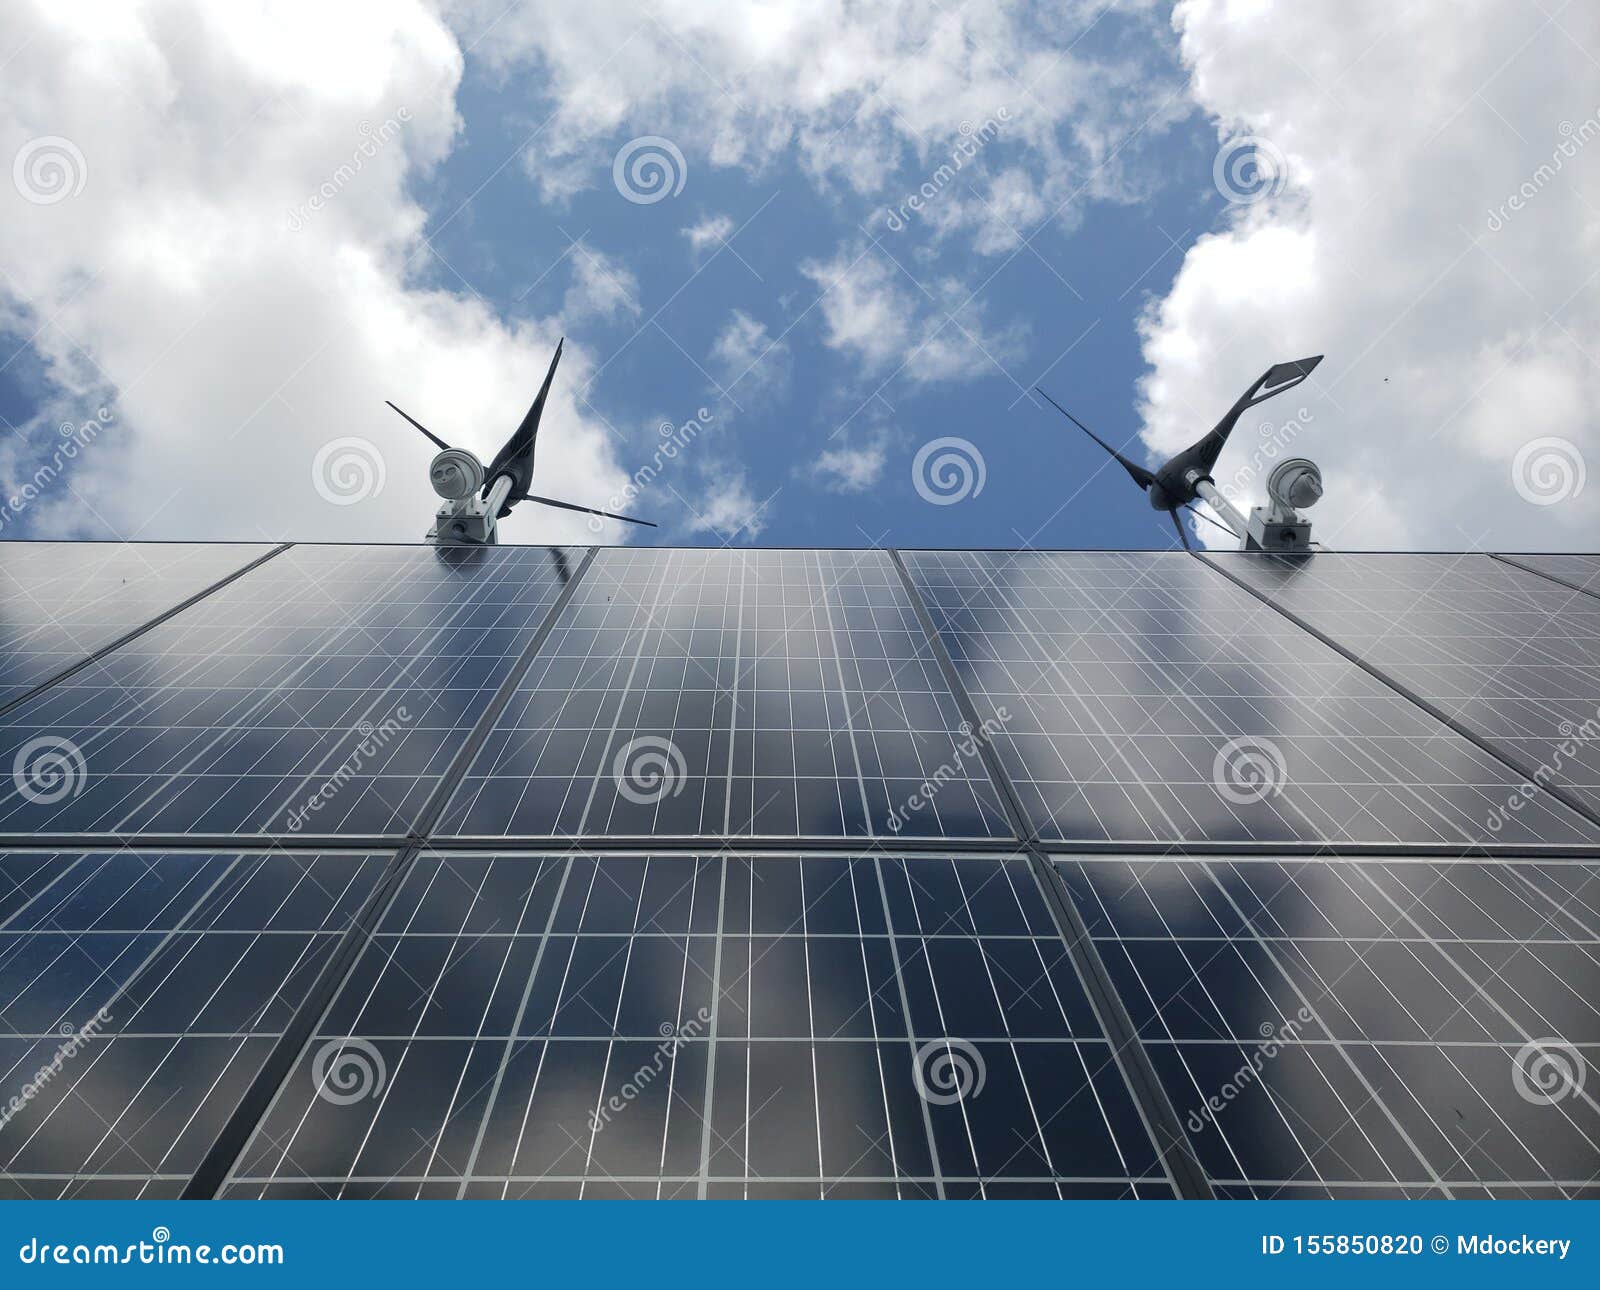 solar panels, turbines, cameras, clouds